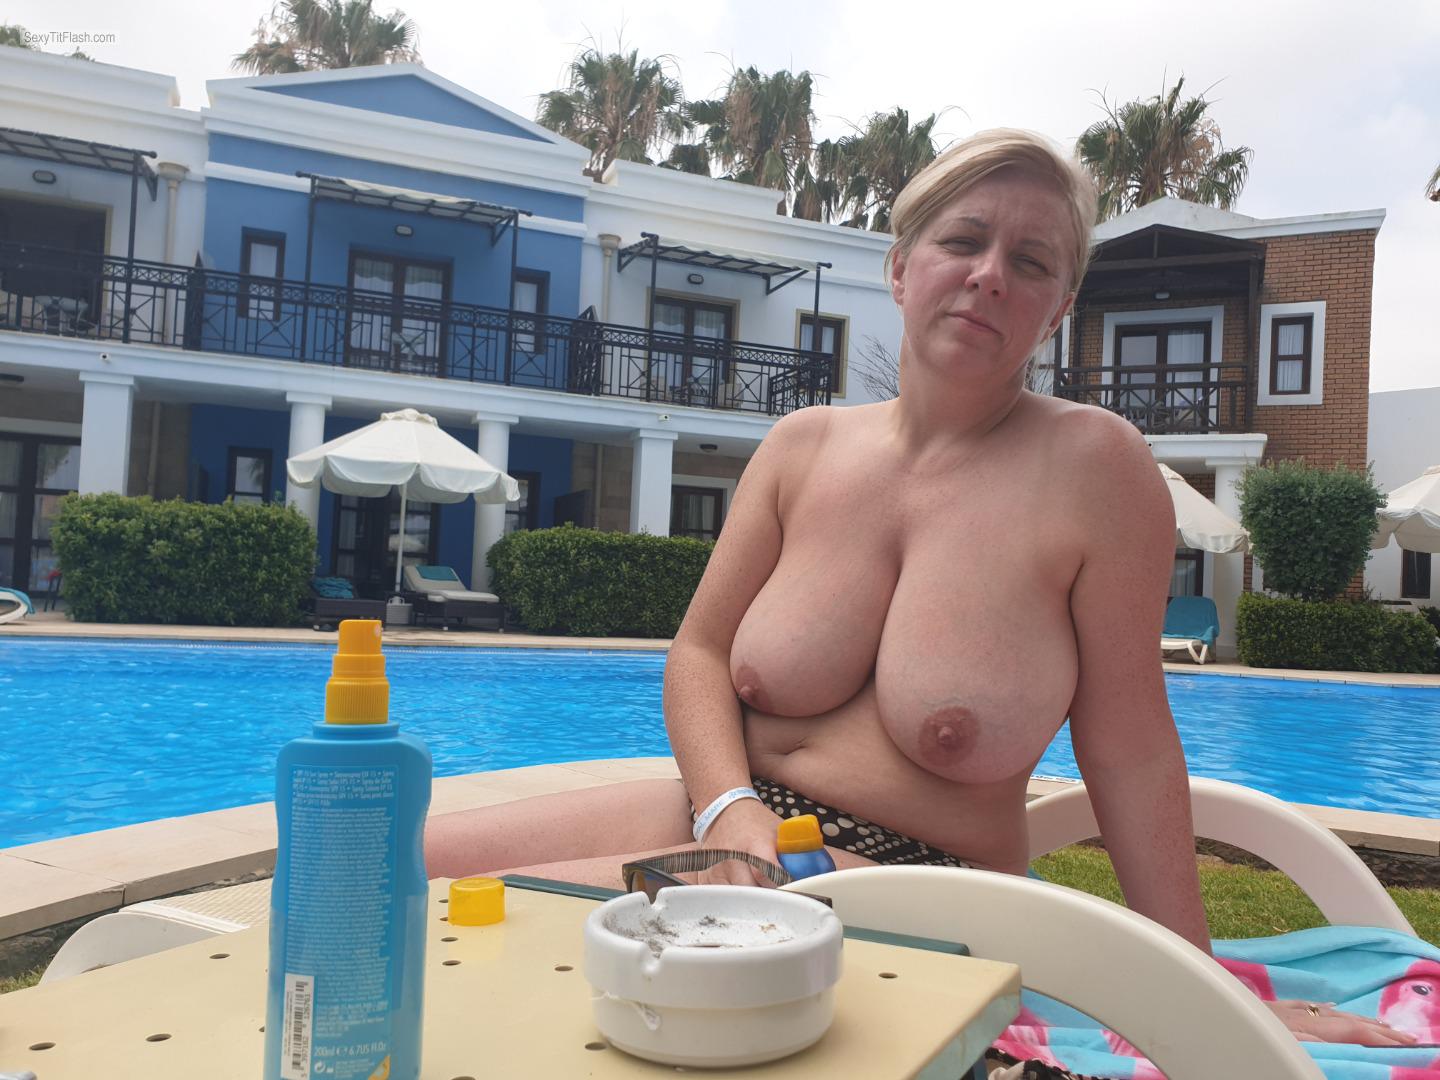 Tit Flash: My Extremely Big Tits - Topless Caroline from United Kingdom